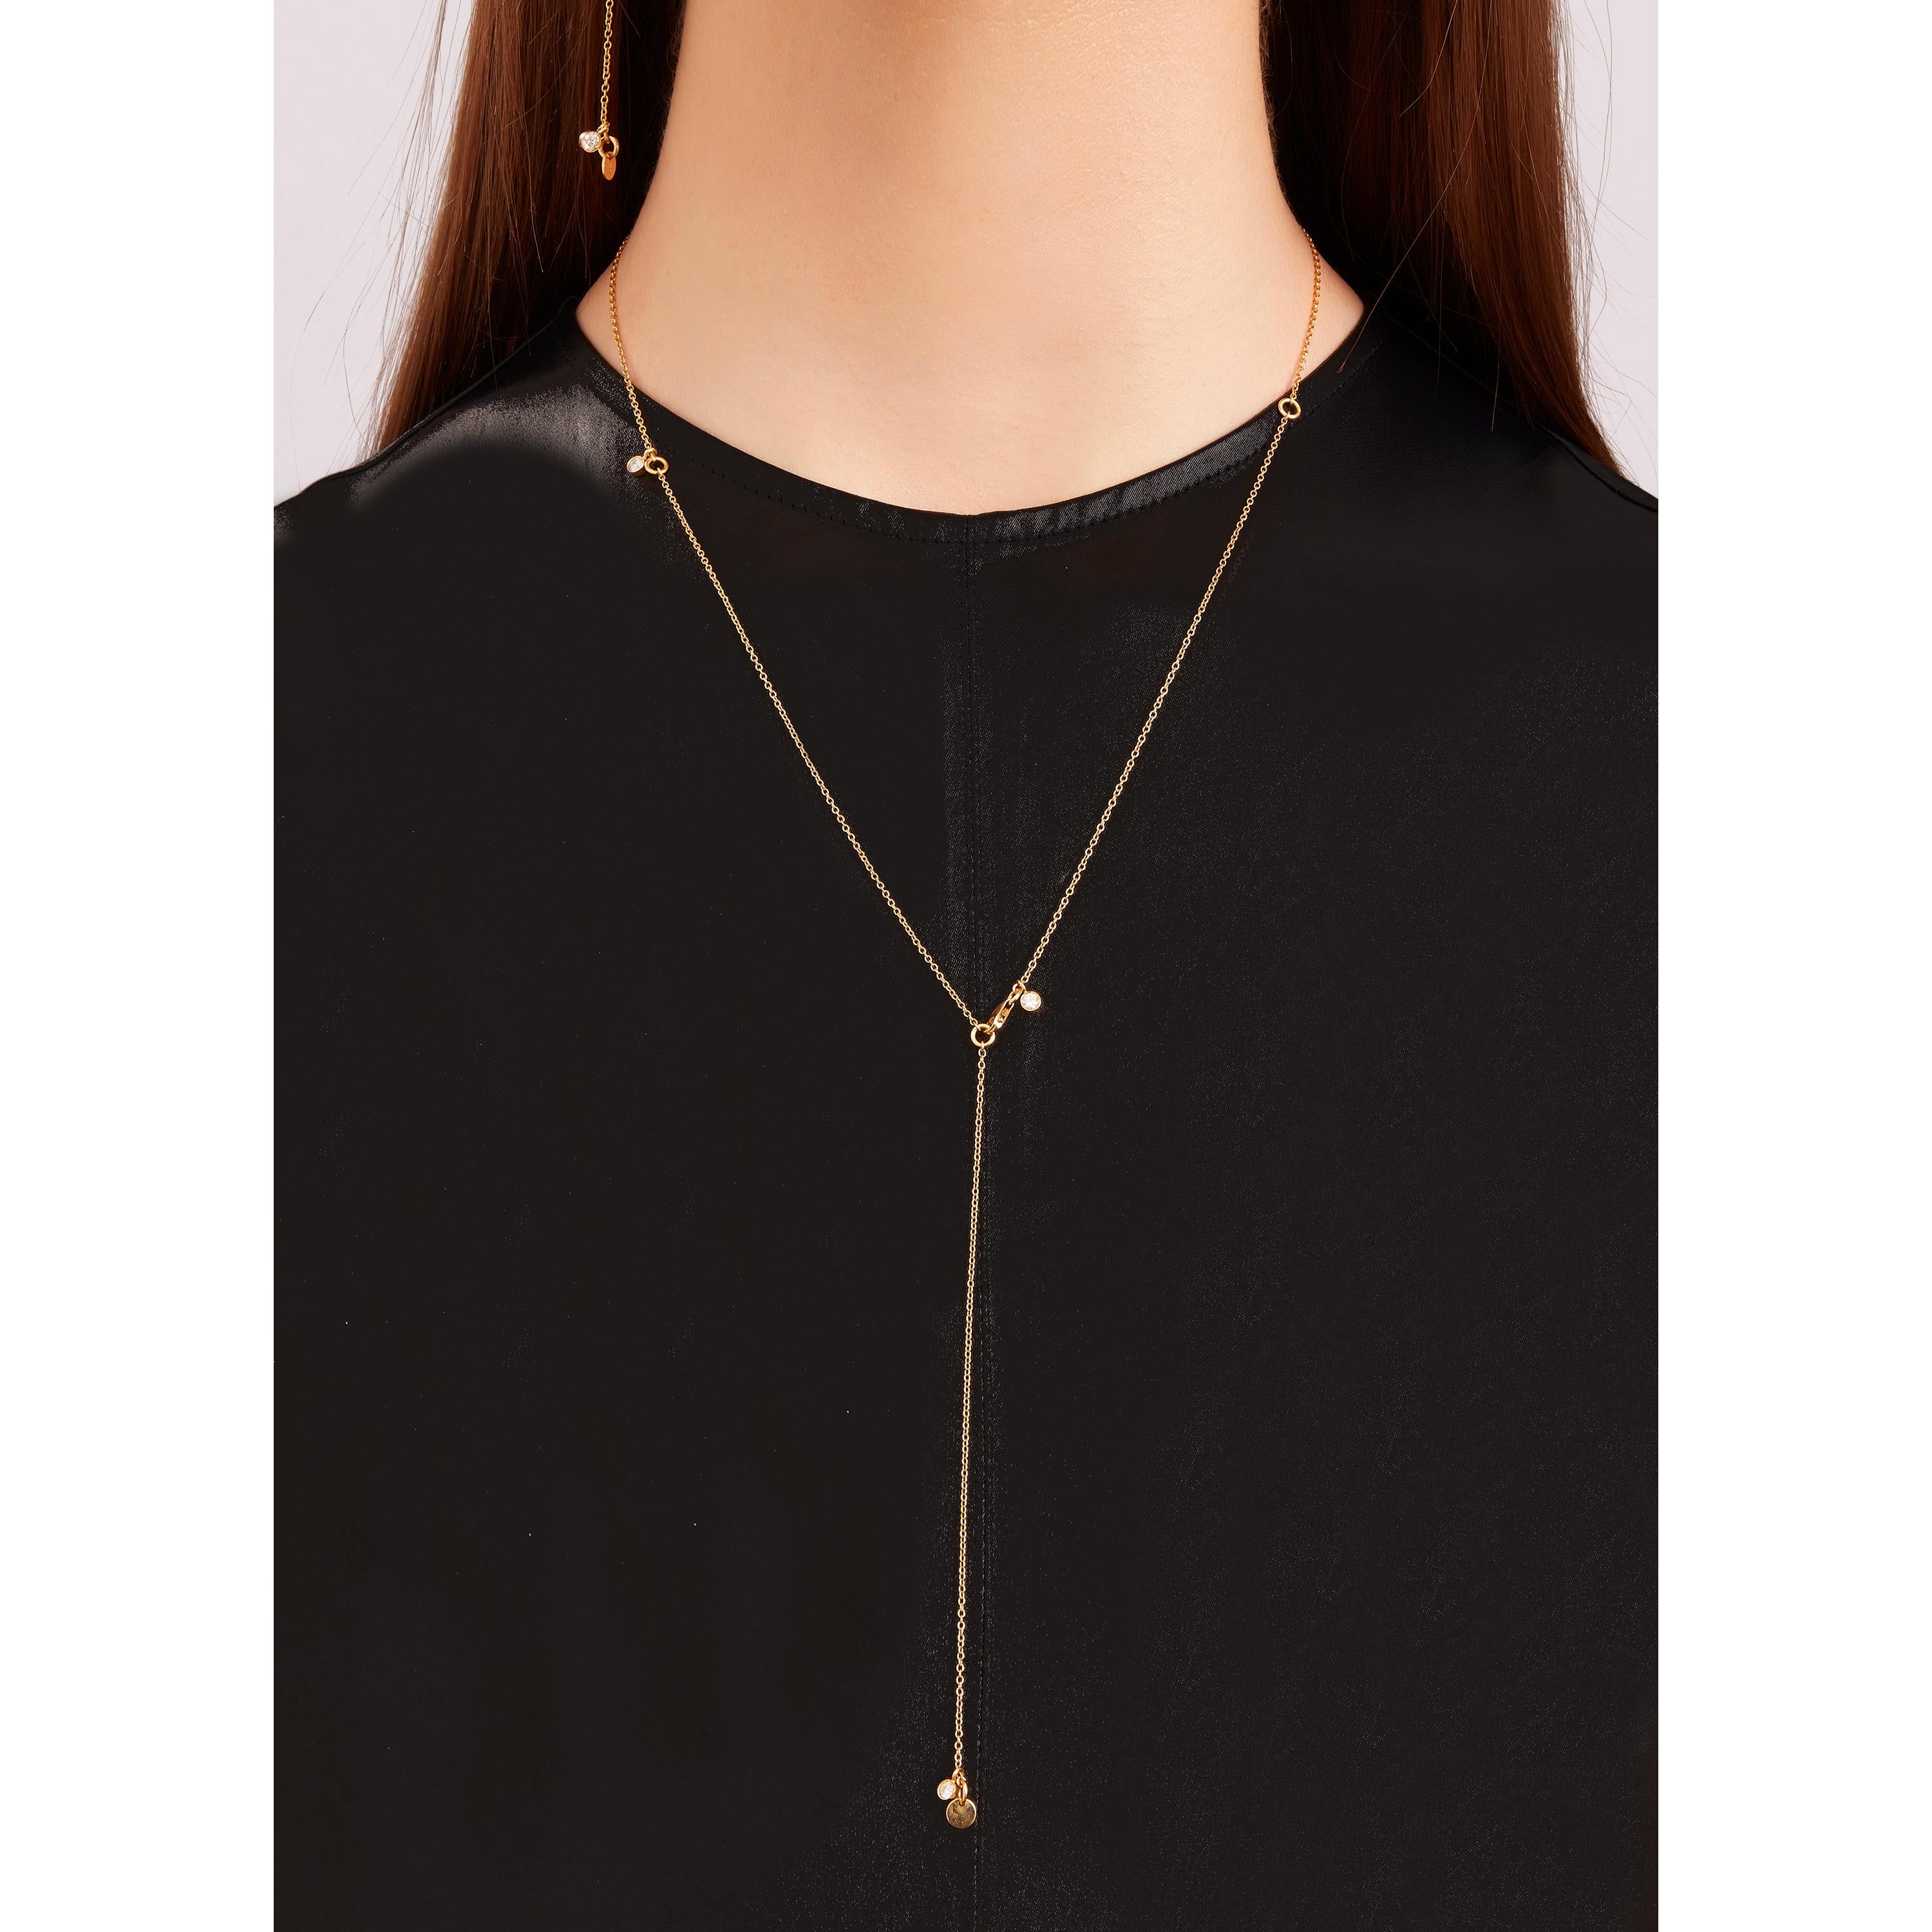 Round Cut Nathalie Jean Contemporary 0.33 Carat Diamond Gold Pendant Chain Necklace For Sale